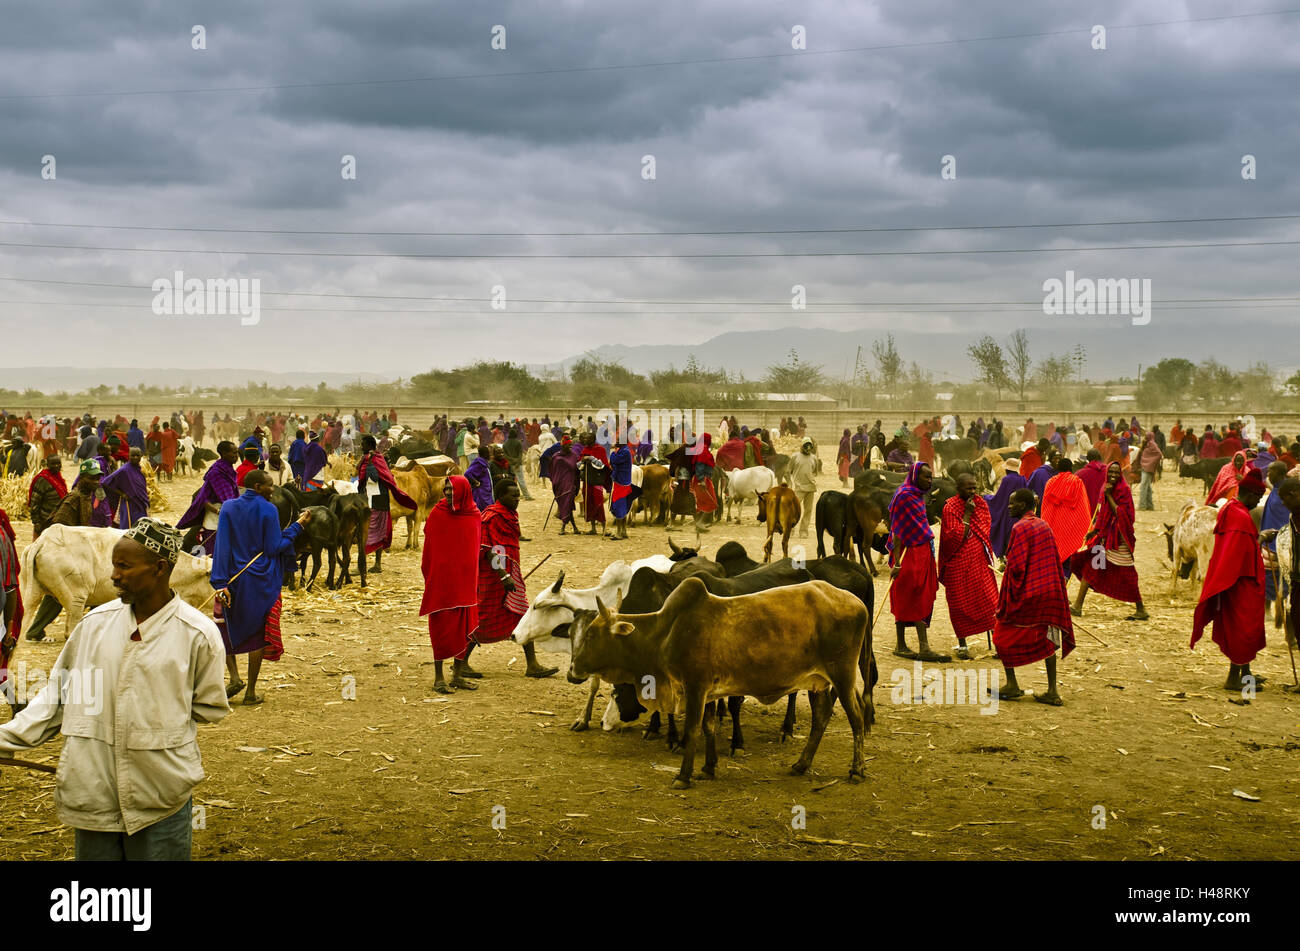 Africa, Tanzania, East Africa, Arusha, market, cattle market, Maasai, Stock Photo